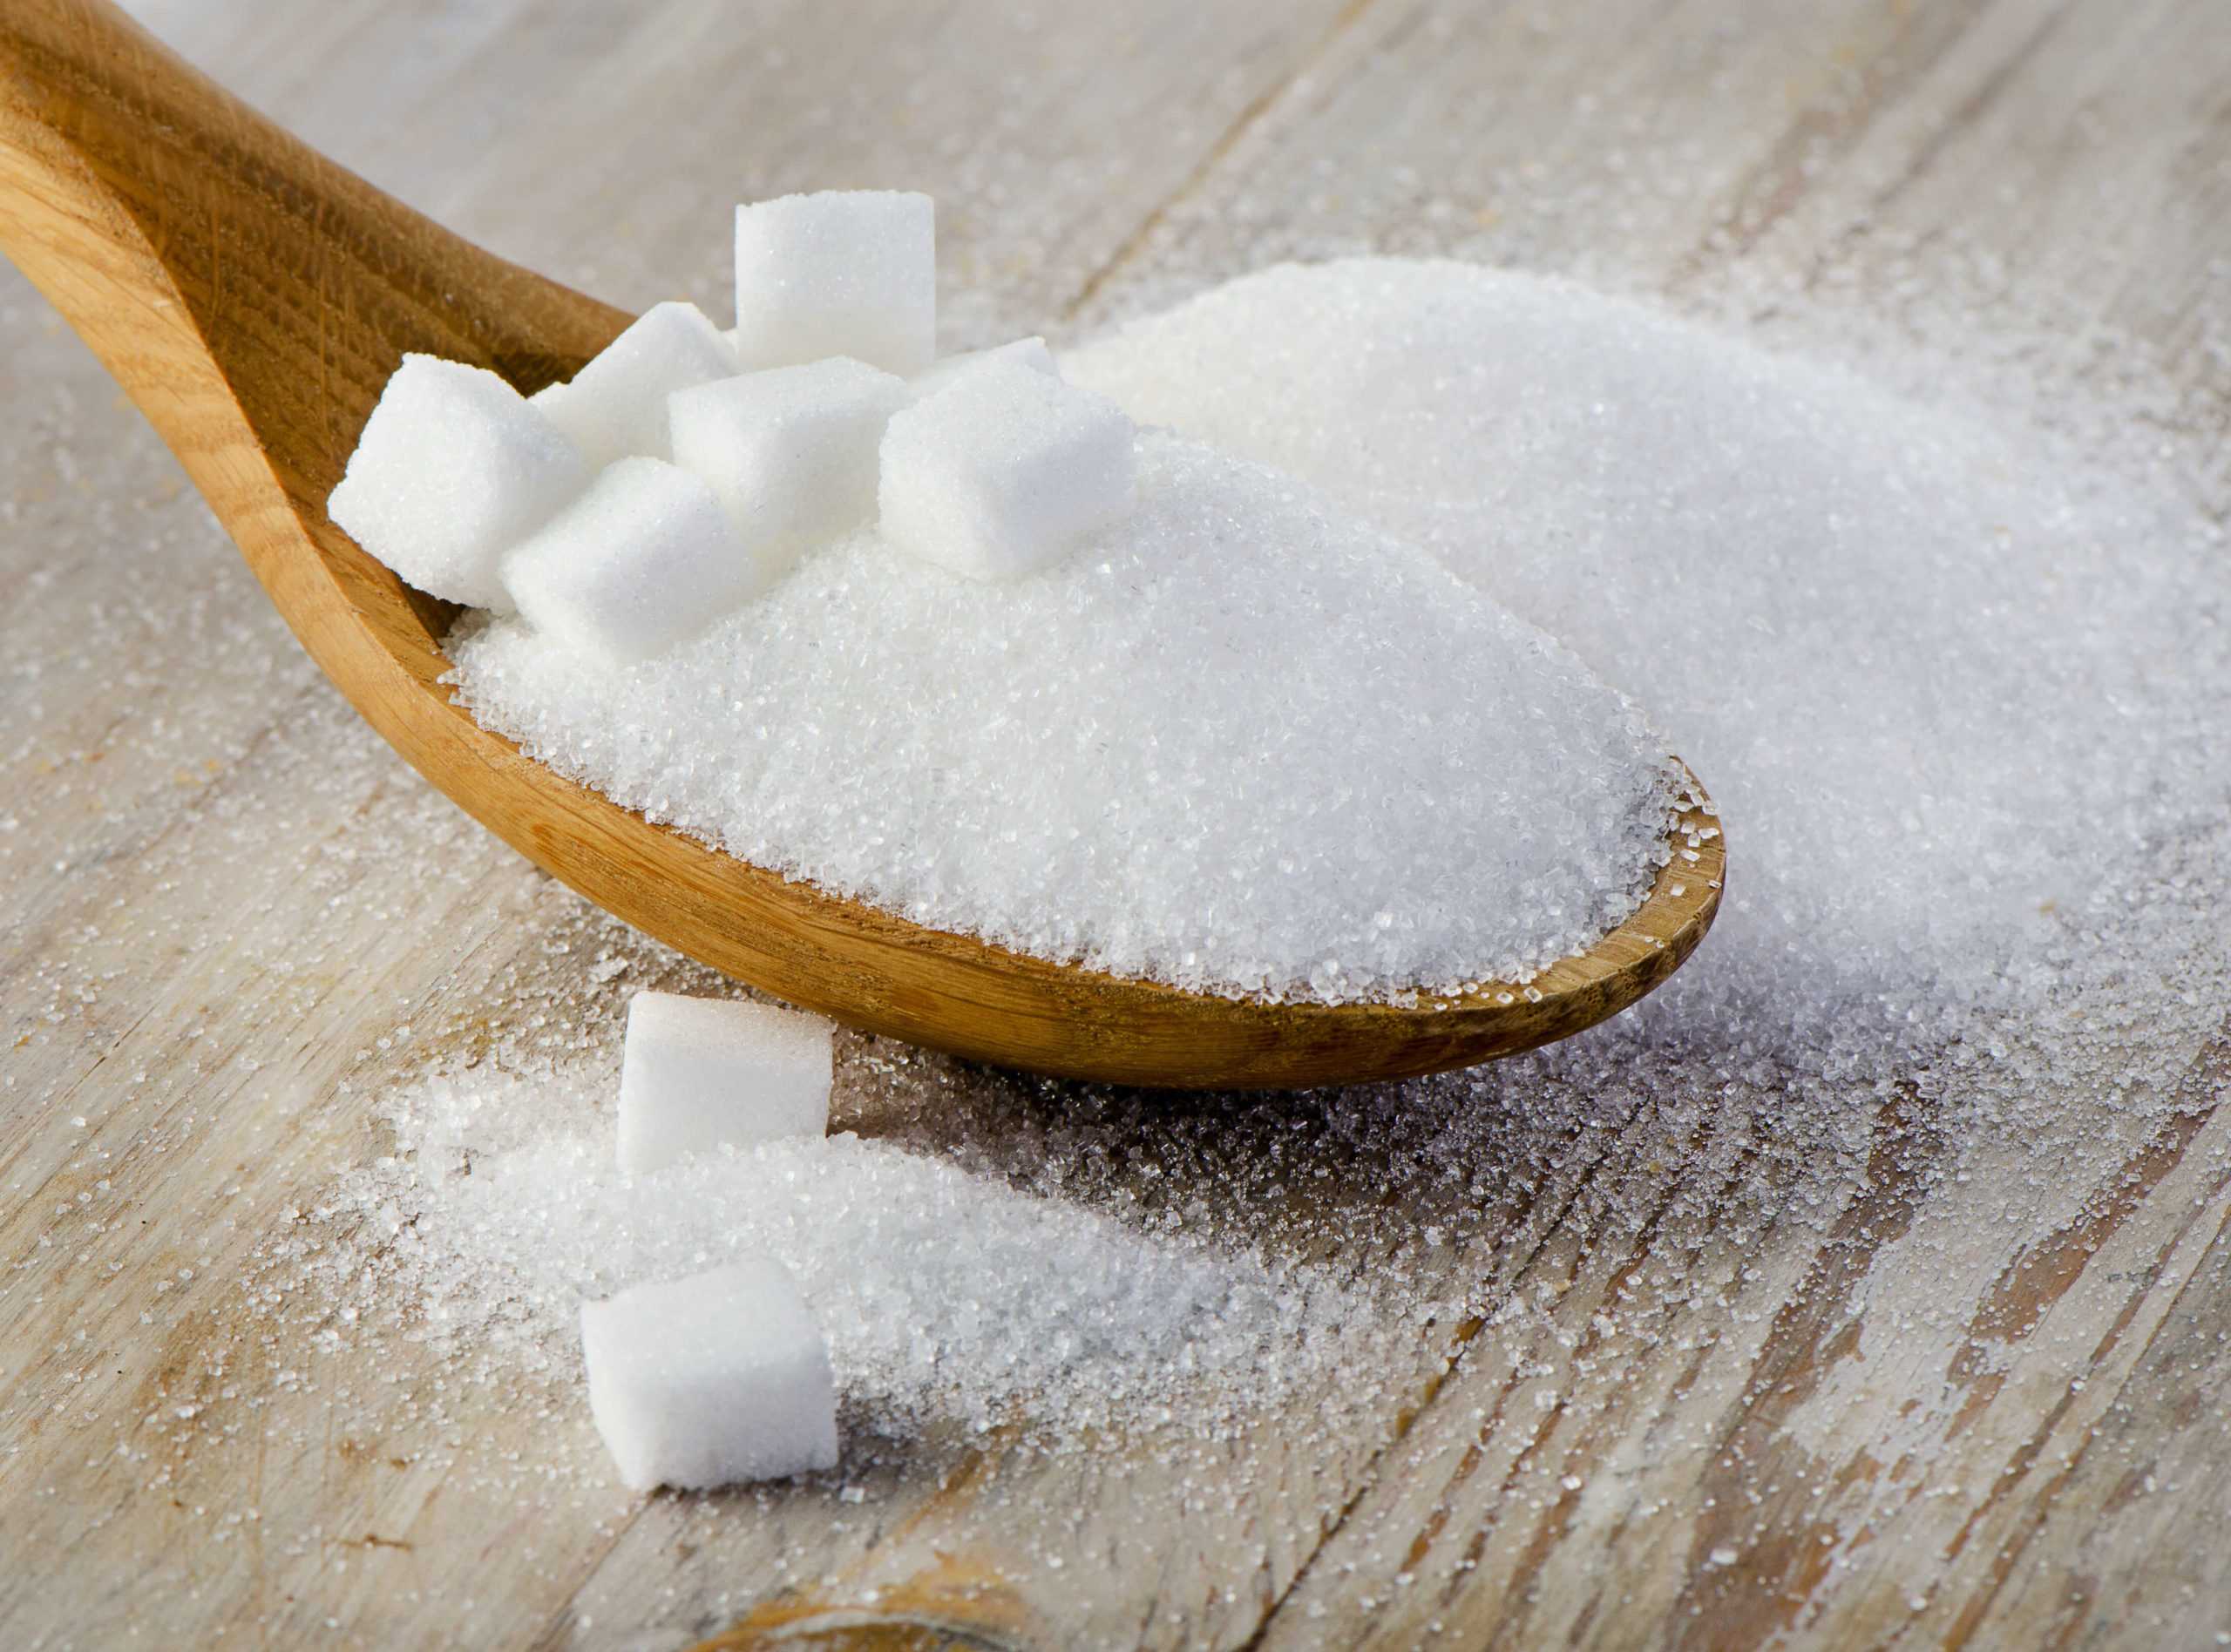 R&D Insights: Sweeteners